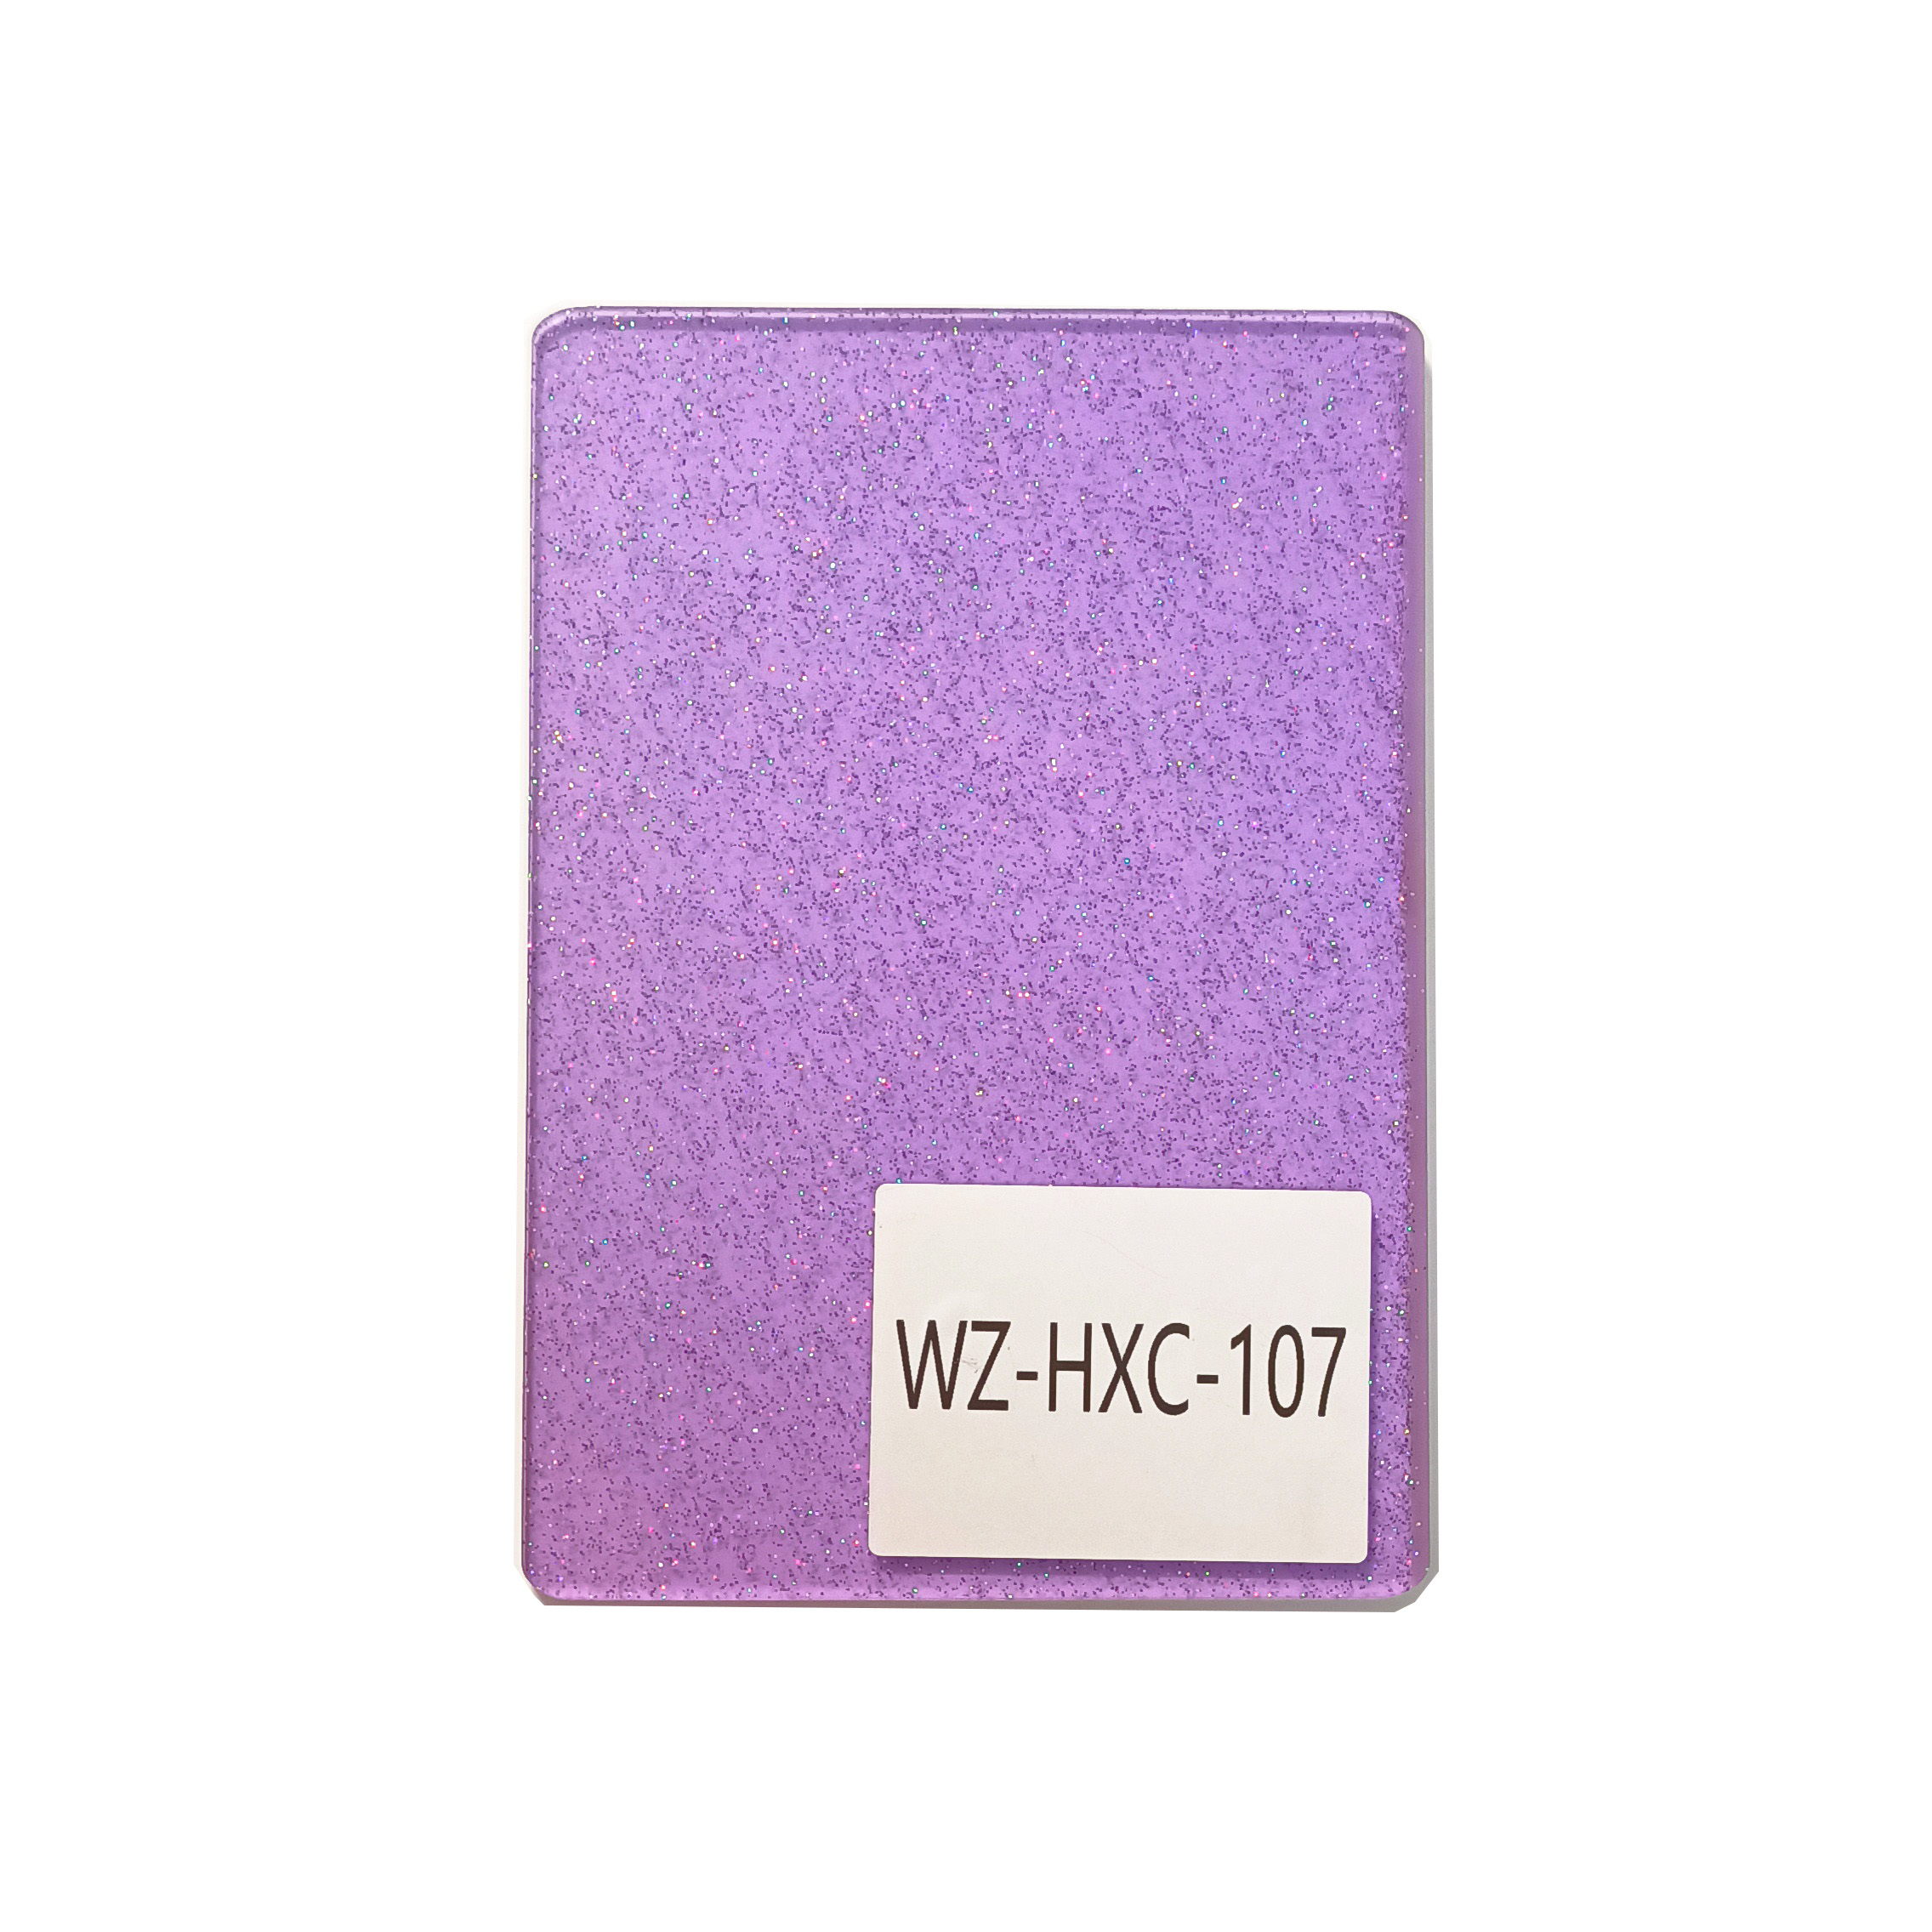 Clear Cast Acrylic Sheet Plastic Sheets Cast Acrylic Sheet Cut To Size Purple Glitter Acrylic Sheet